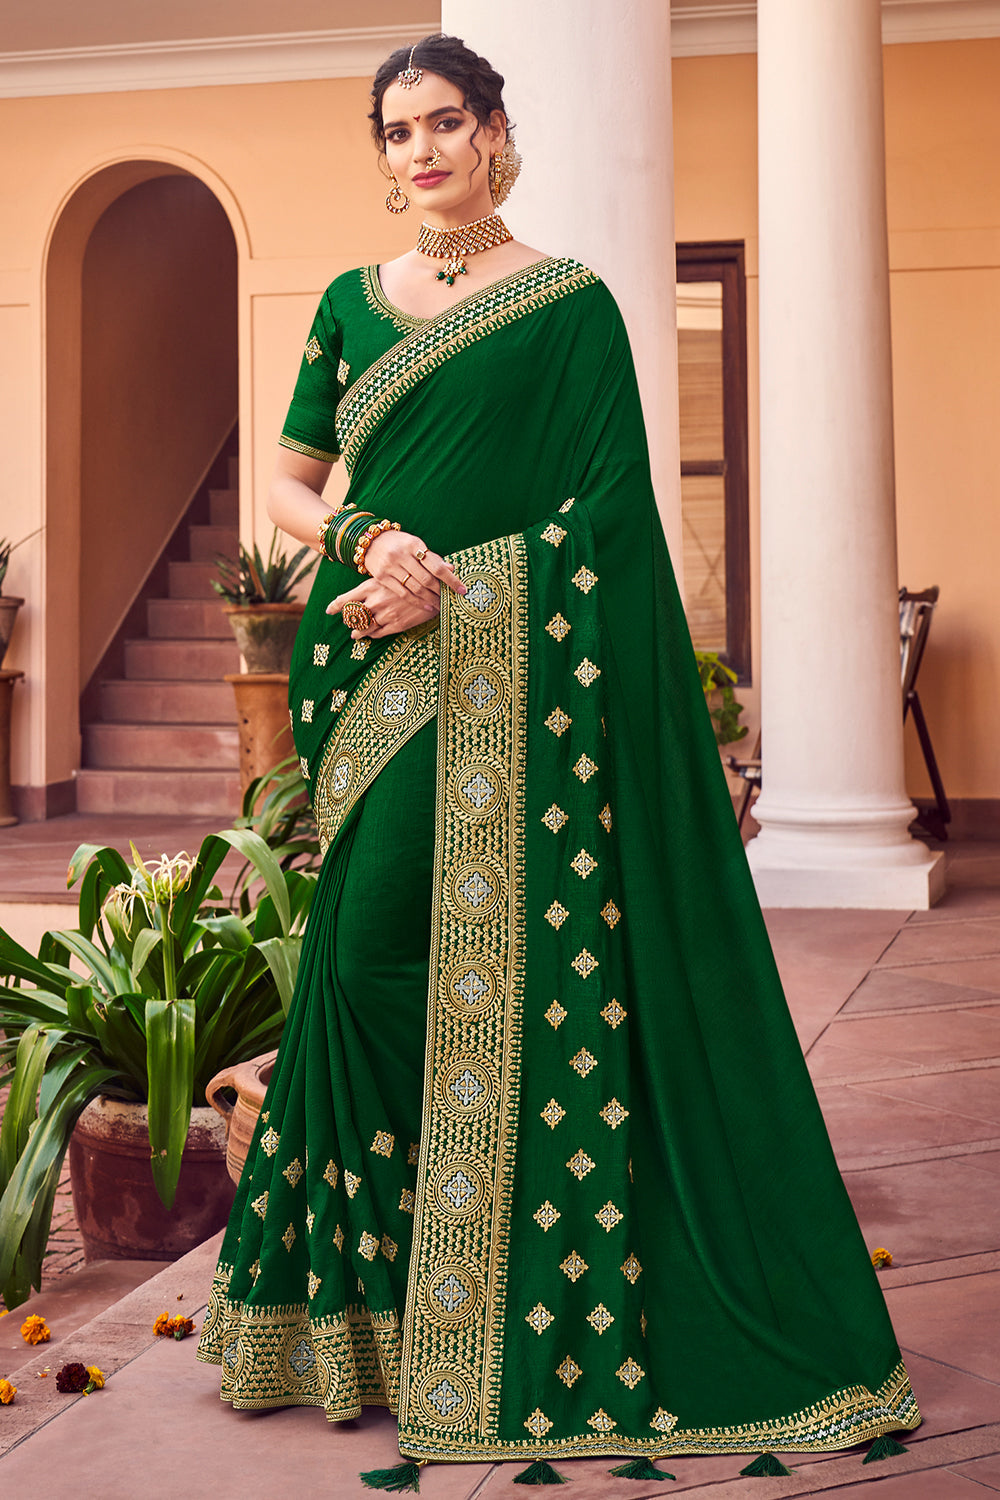 Green Vichitra Silk Embroidered Designer Stunning Saree Blouse Design at Rs  1599 | कढ़ाई वाली रेशम की साड़ी - Skyblue Fashion, Surat | ID: 2850460922255